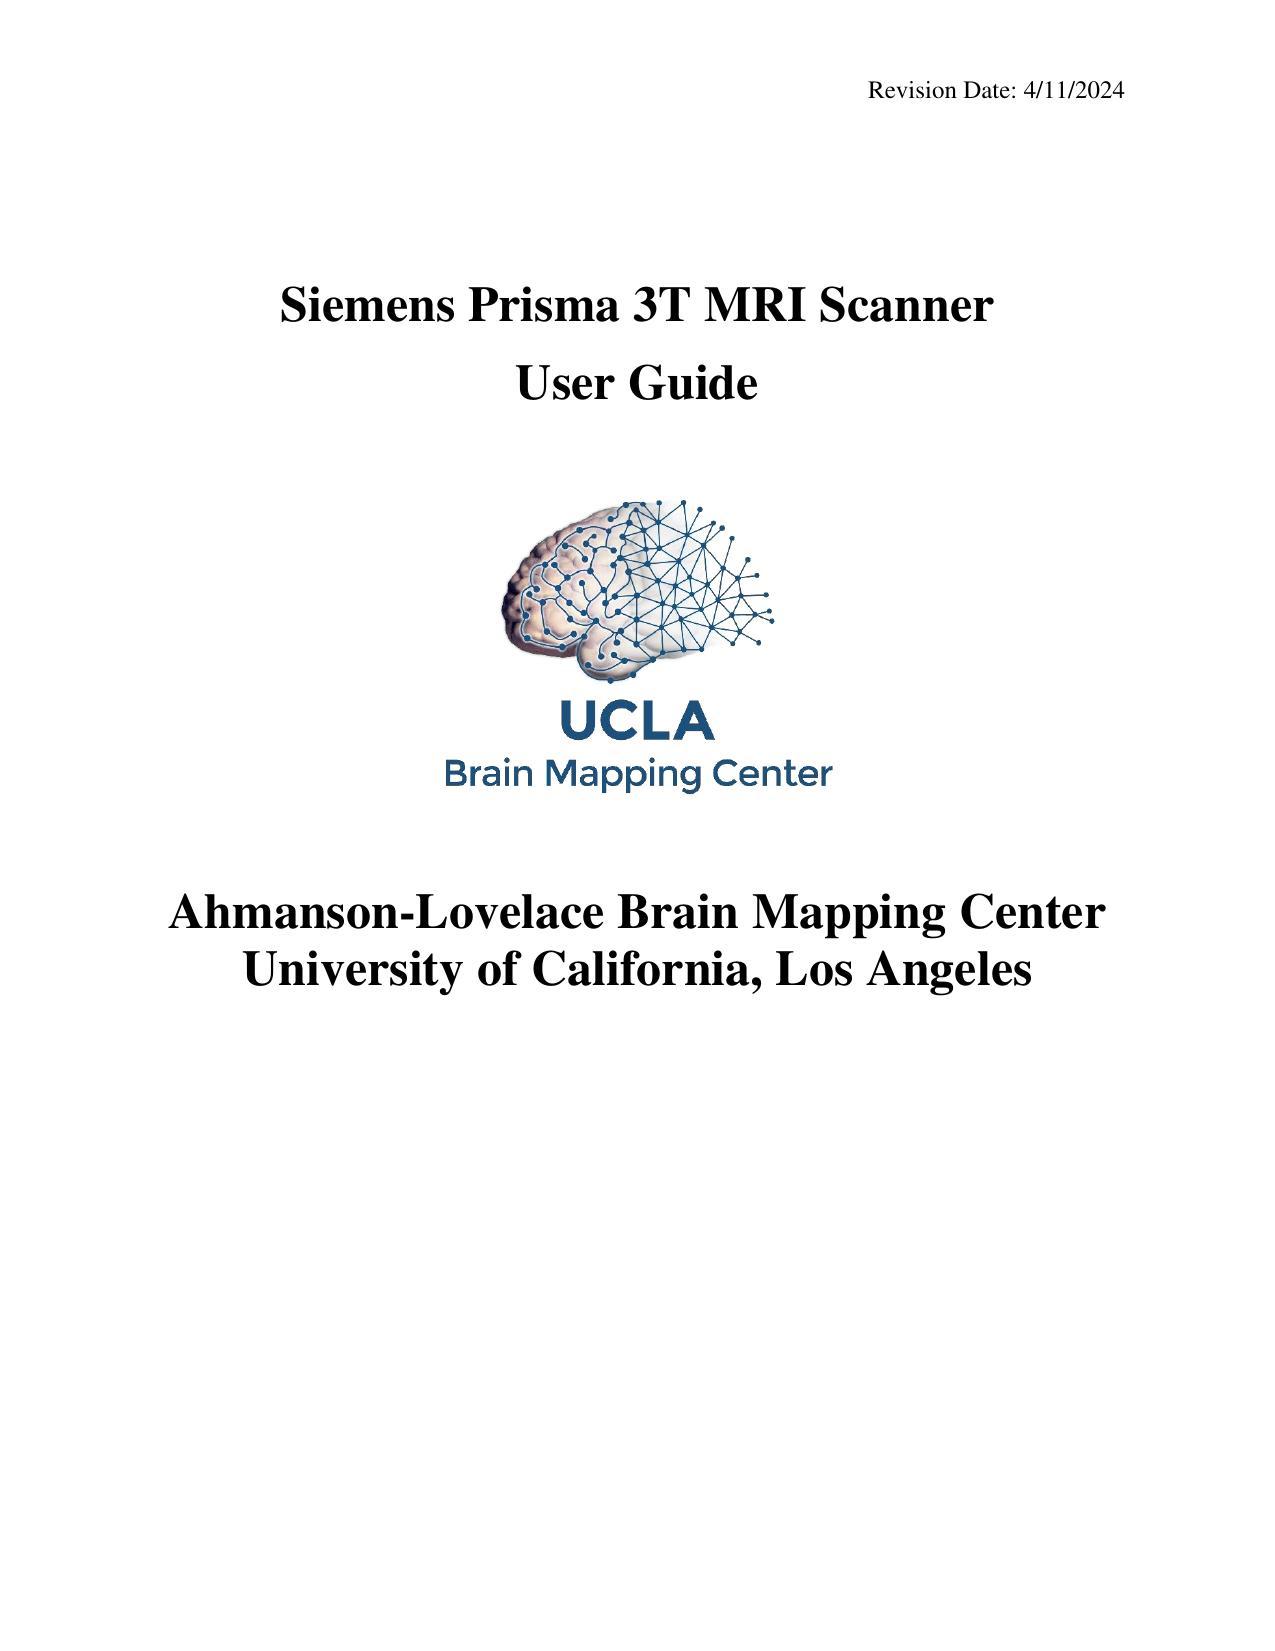 siemens-prisma-3t-mri-scanner-user-guide.pdf